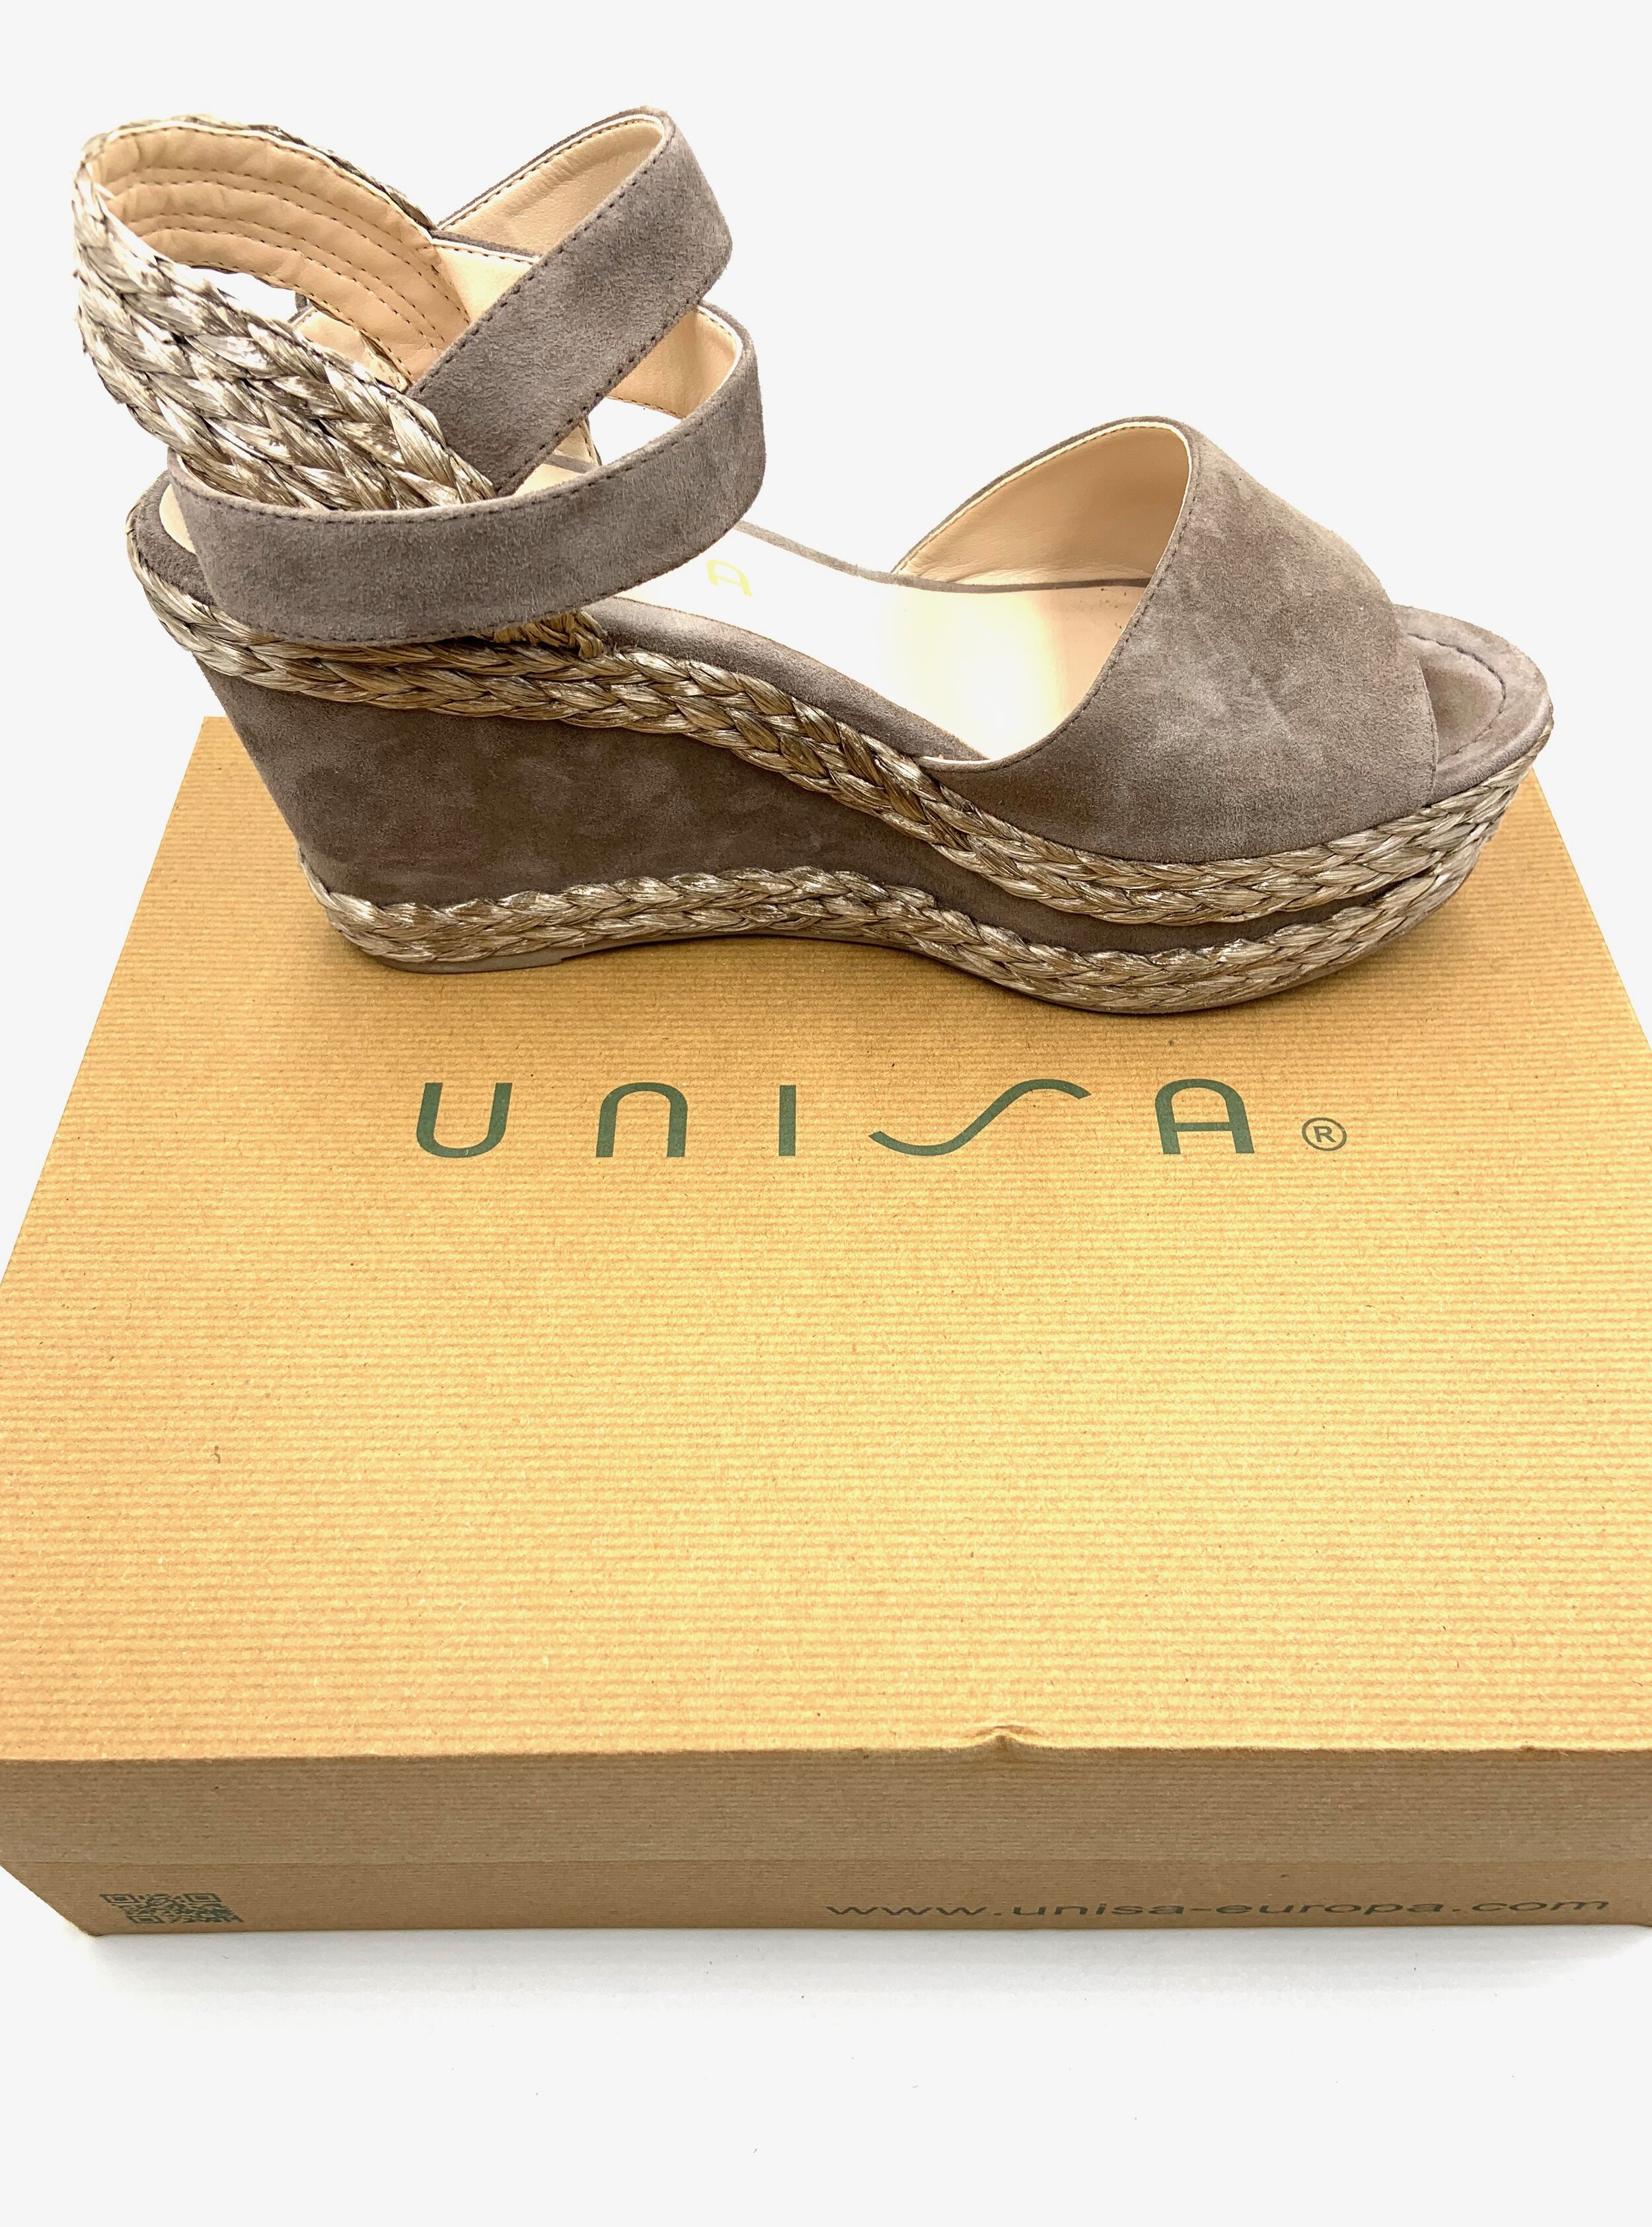 Unisa Shoes | Murphys Shoes Bantry Cork – Murphys Shoe Store Limited